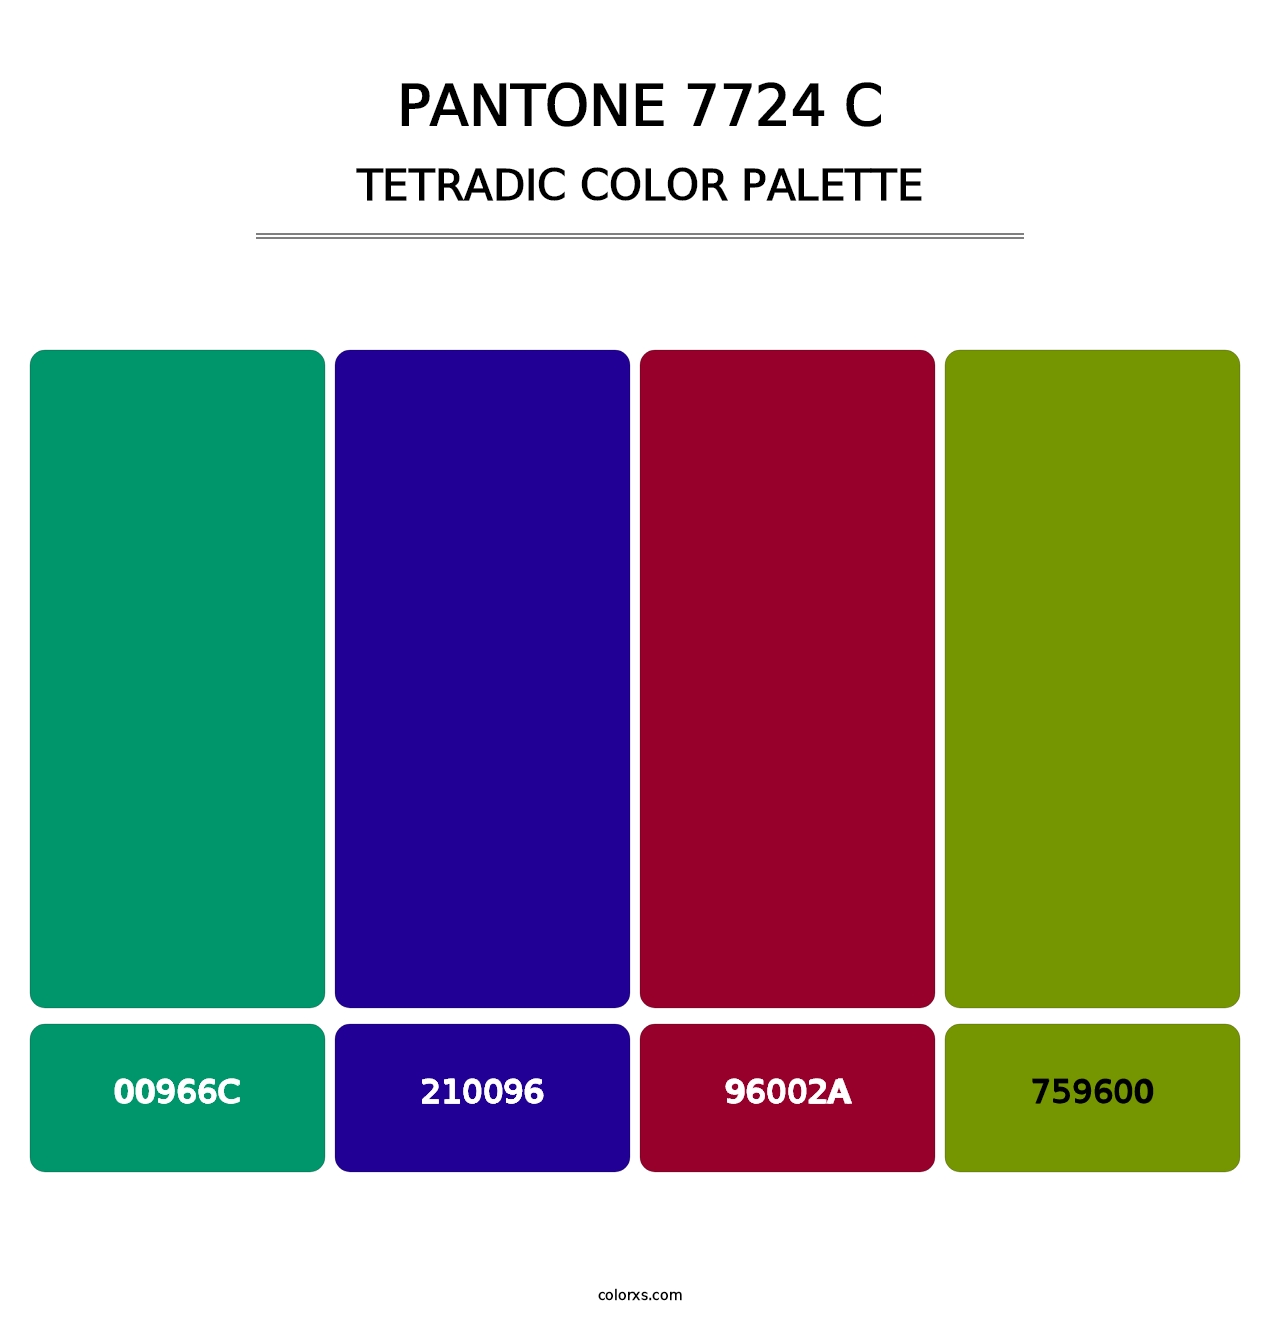 PANTONE 7724 C - Tetradic Color Palette